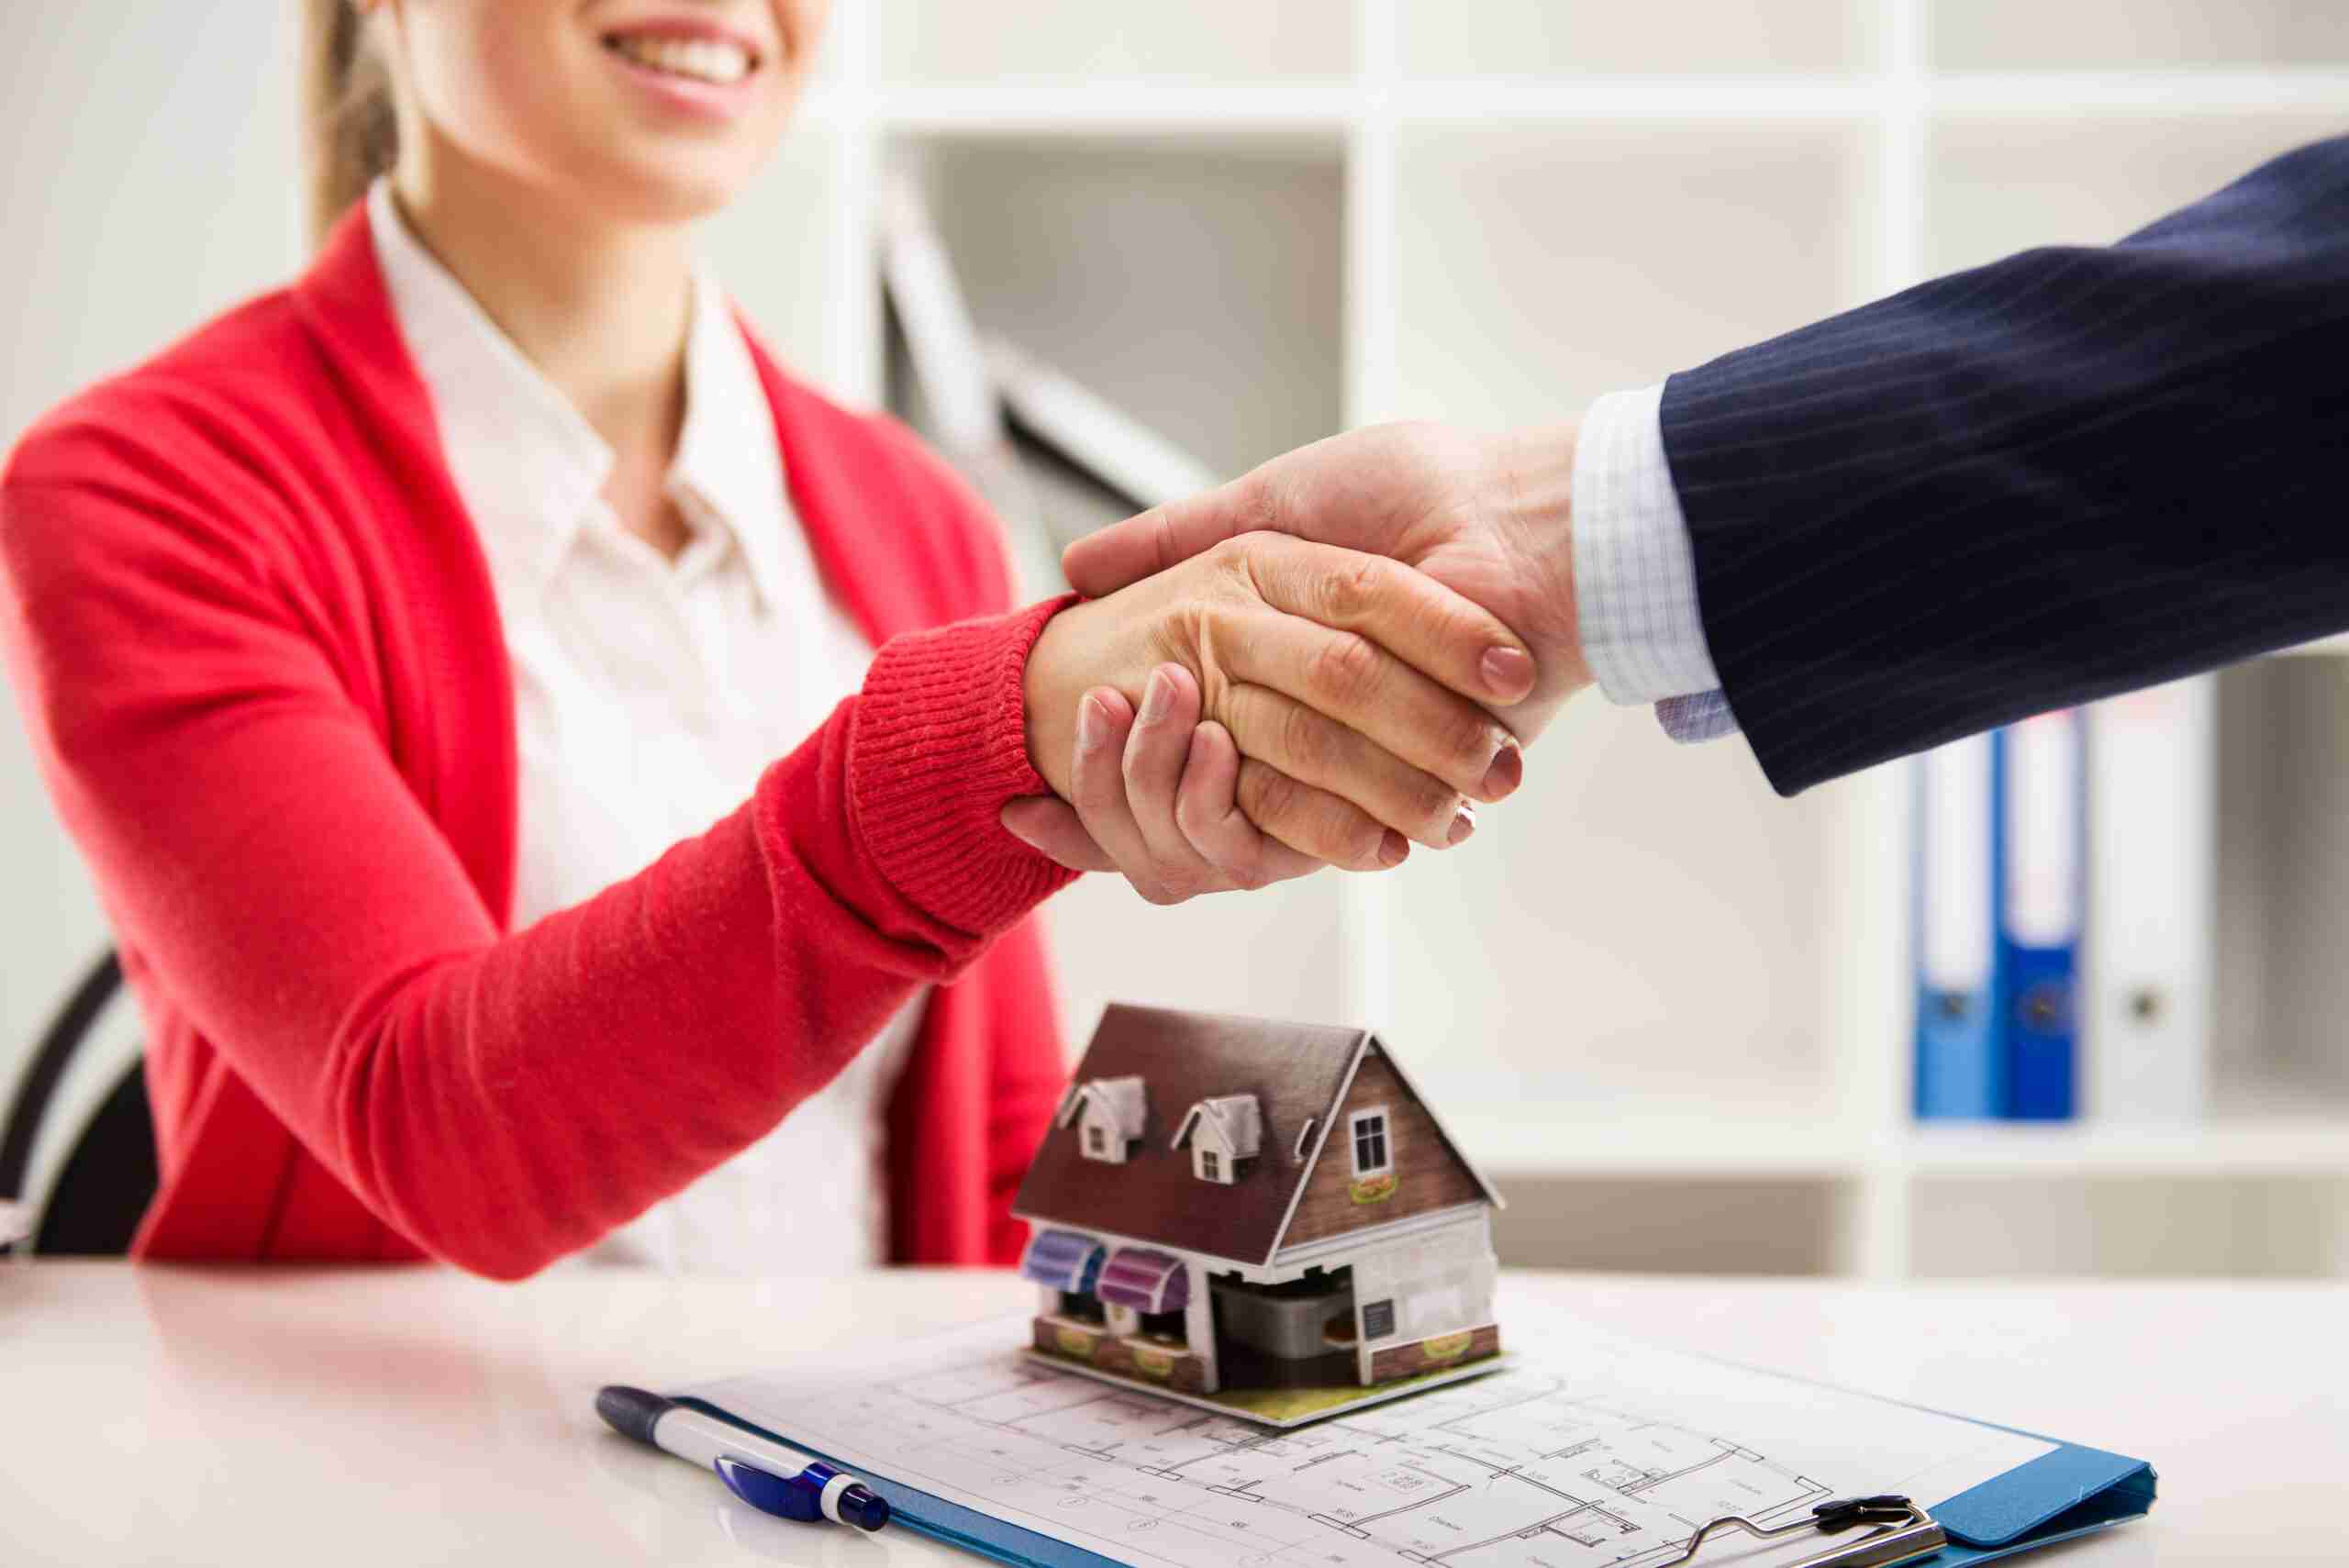 Real Estate Negotiation Tips